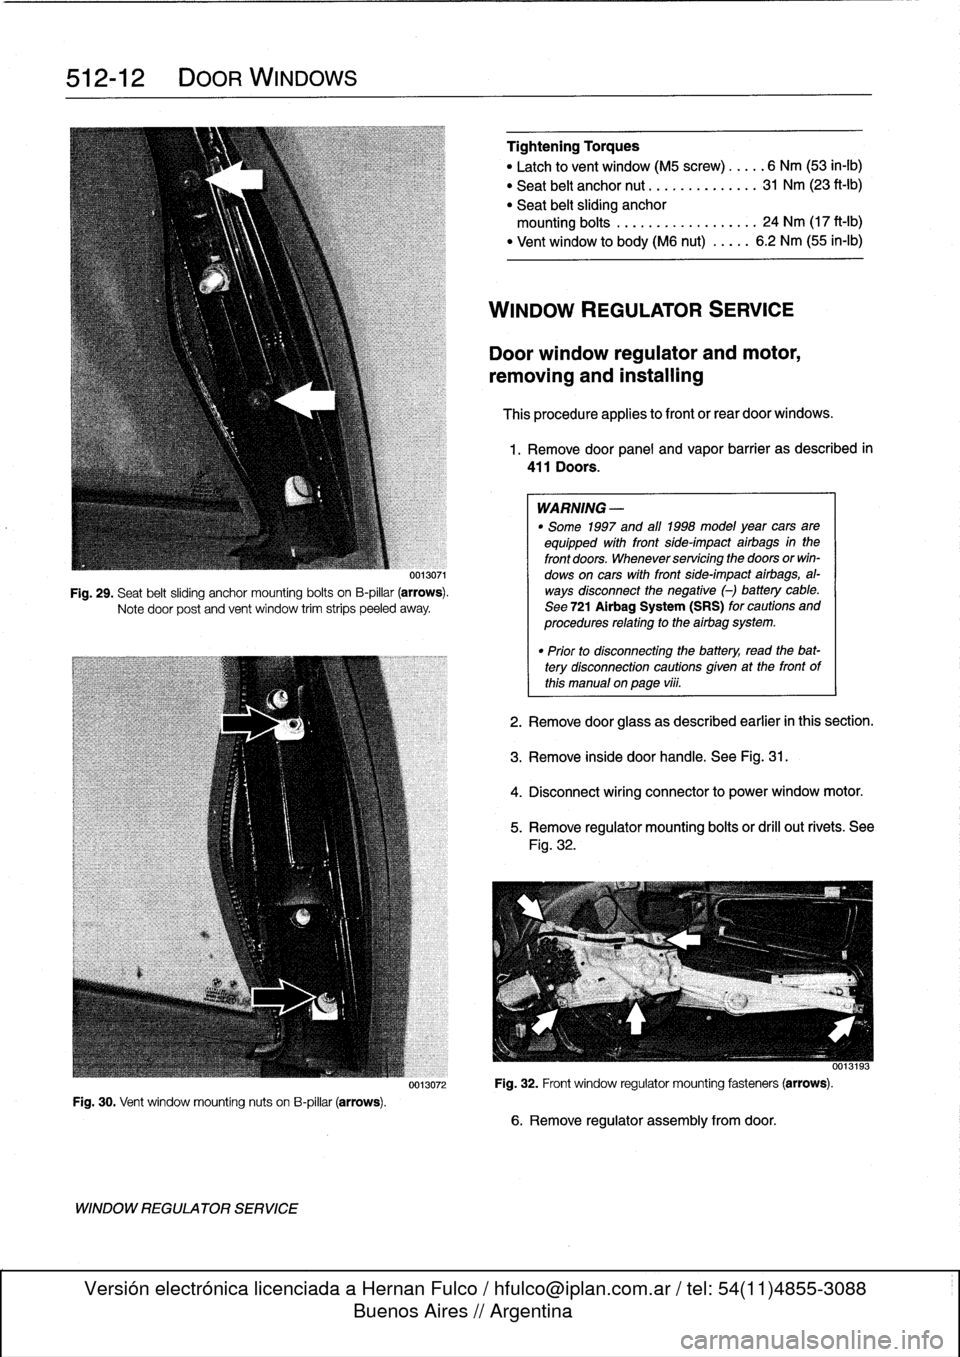 BMW 328i 1997 E36 Workshop Manual 
512-
1
2

	

DOOR
WINDOWS

Fig
.
30
.
Vent
window
mounting
nuts
on
B-pillar
(arrows)
.

WINDOW
REGULATOR
SERVICE

0013071

Fig
.
29
.
Seat
belt
sliding
anchor
mounting
bolts
on
B-pillar
(arrows)
.

N